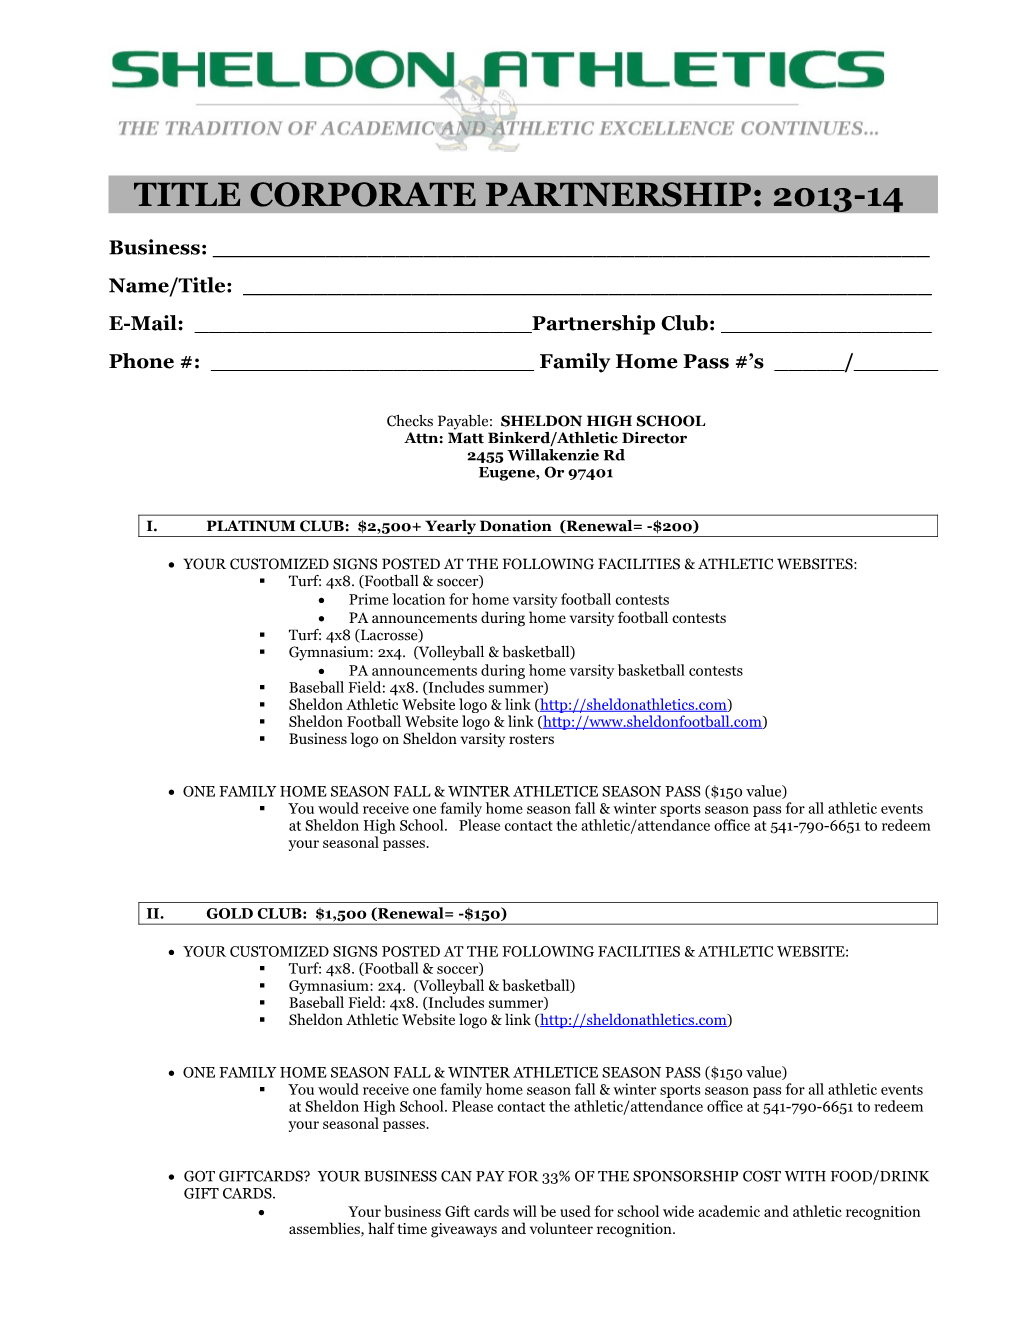 Title Corporate Partnership: 2013-14